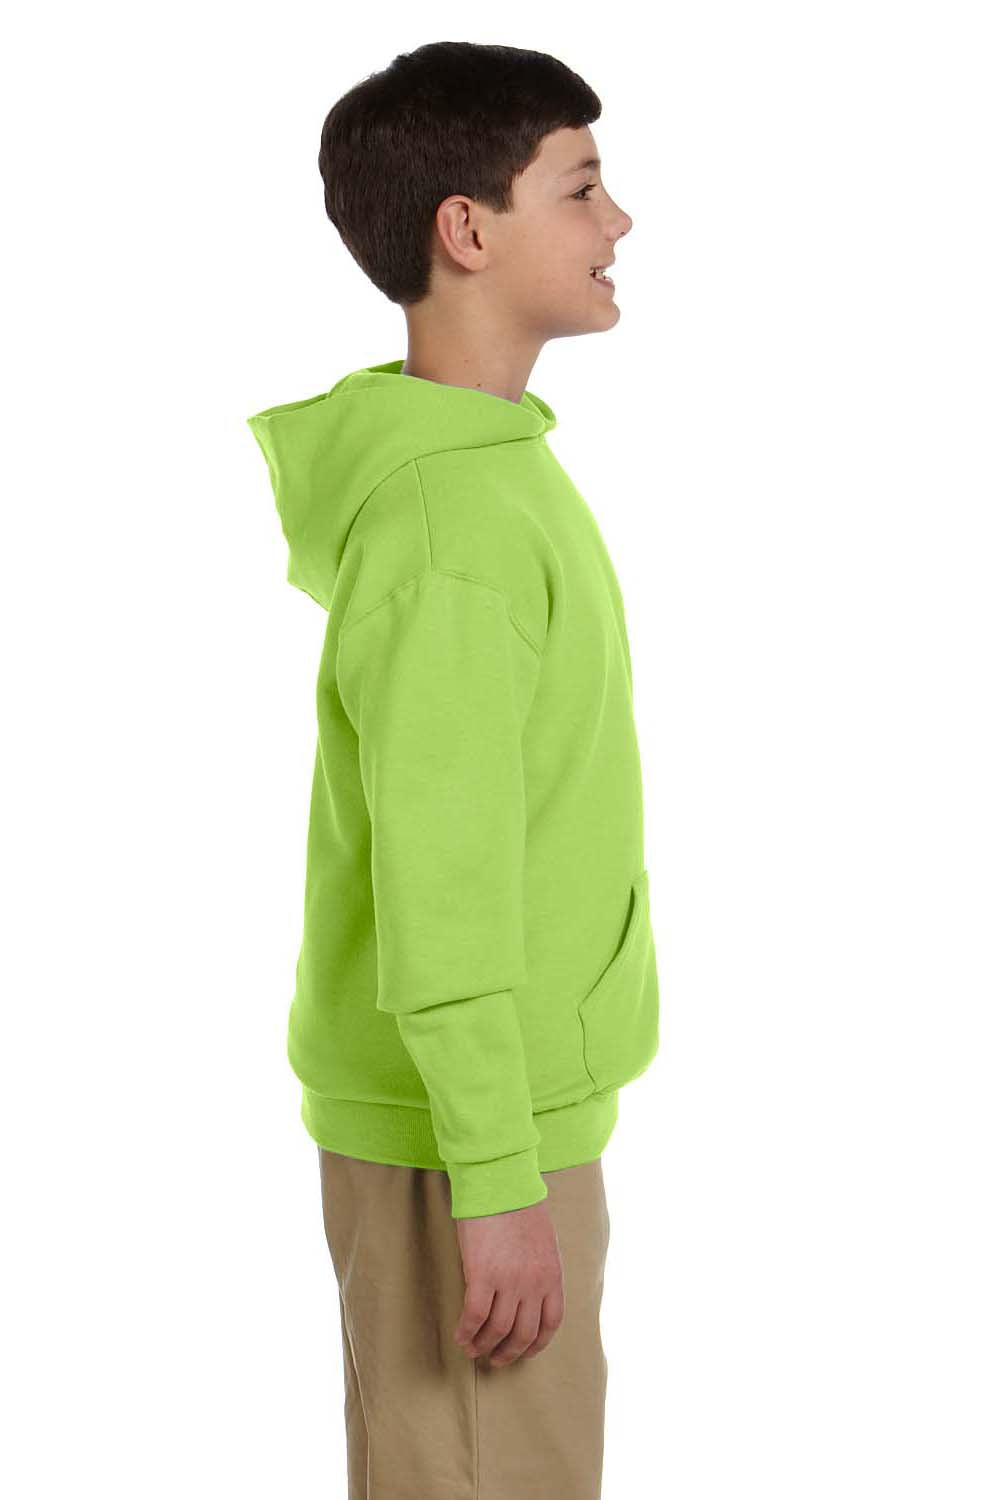 Jerzees 996Y Youth NuBlend Fleece Hooded Sweatshirt Hoodie Neon Green Side